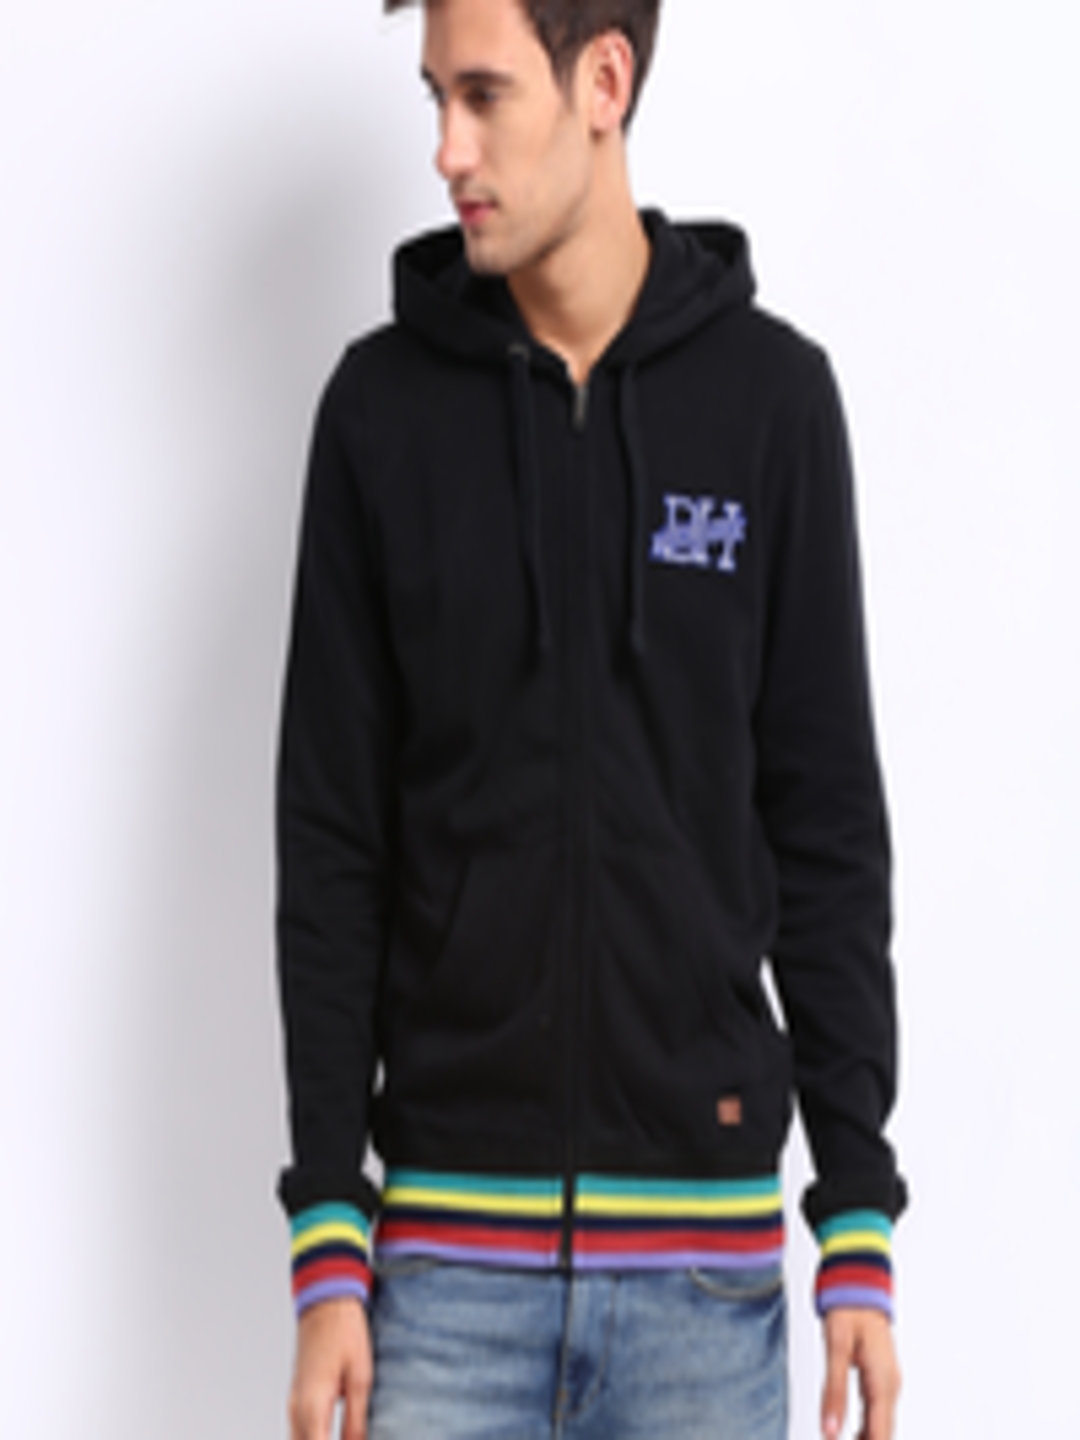 Buy Being Human Clothing Men Black Hooded Sweatshirt - Sweatshirts for